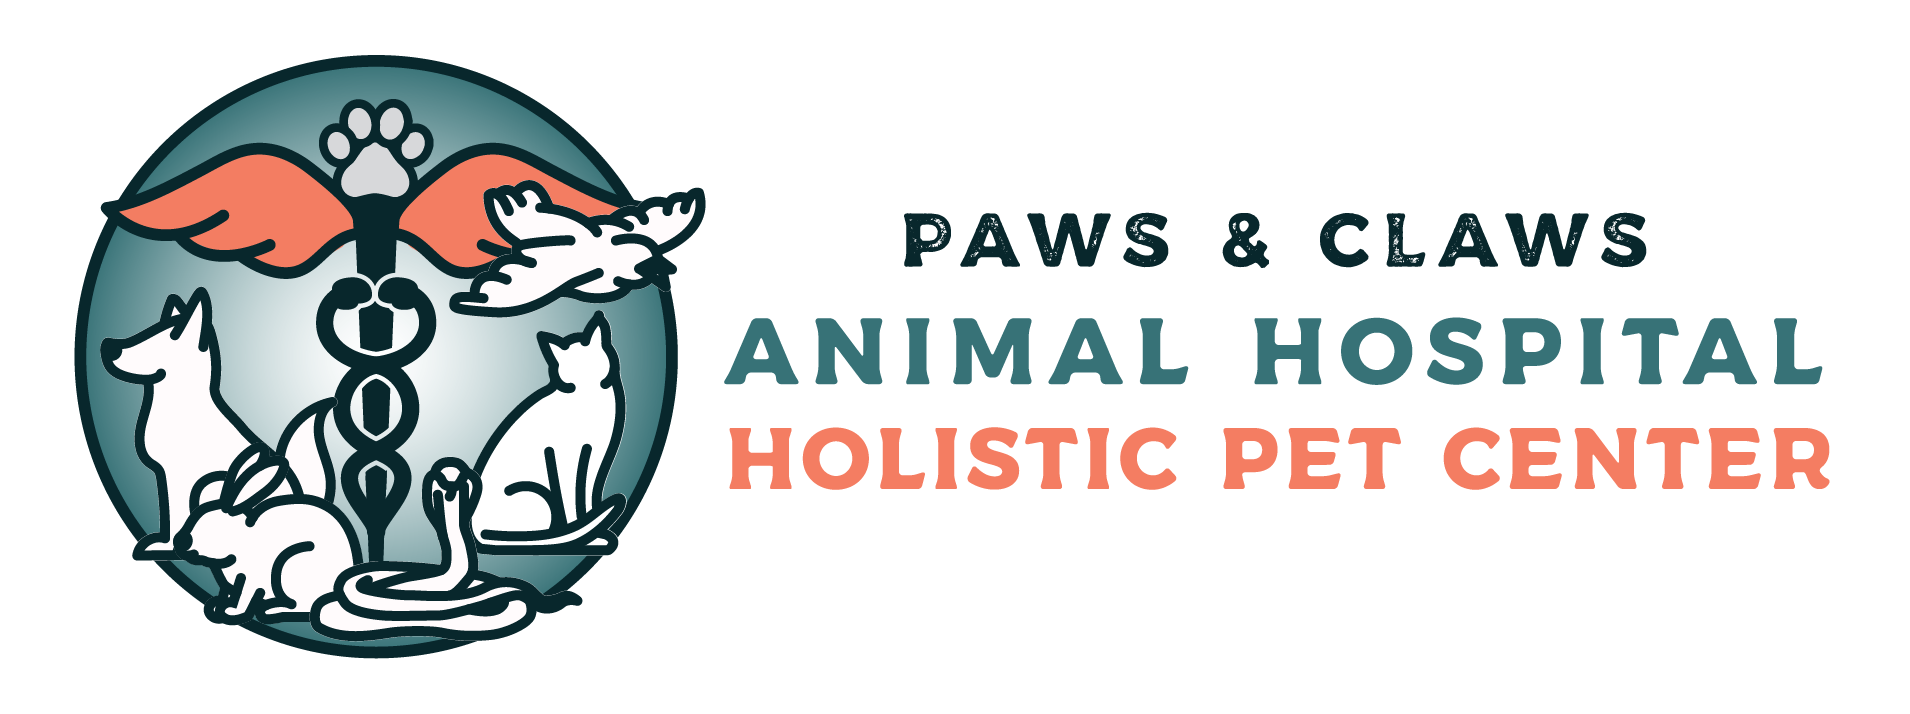 Paws & Claws Animal Hospital